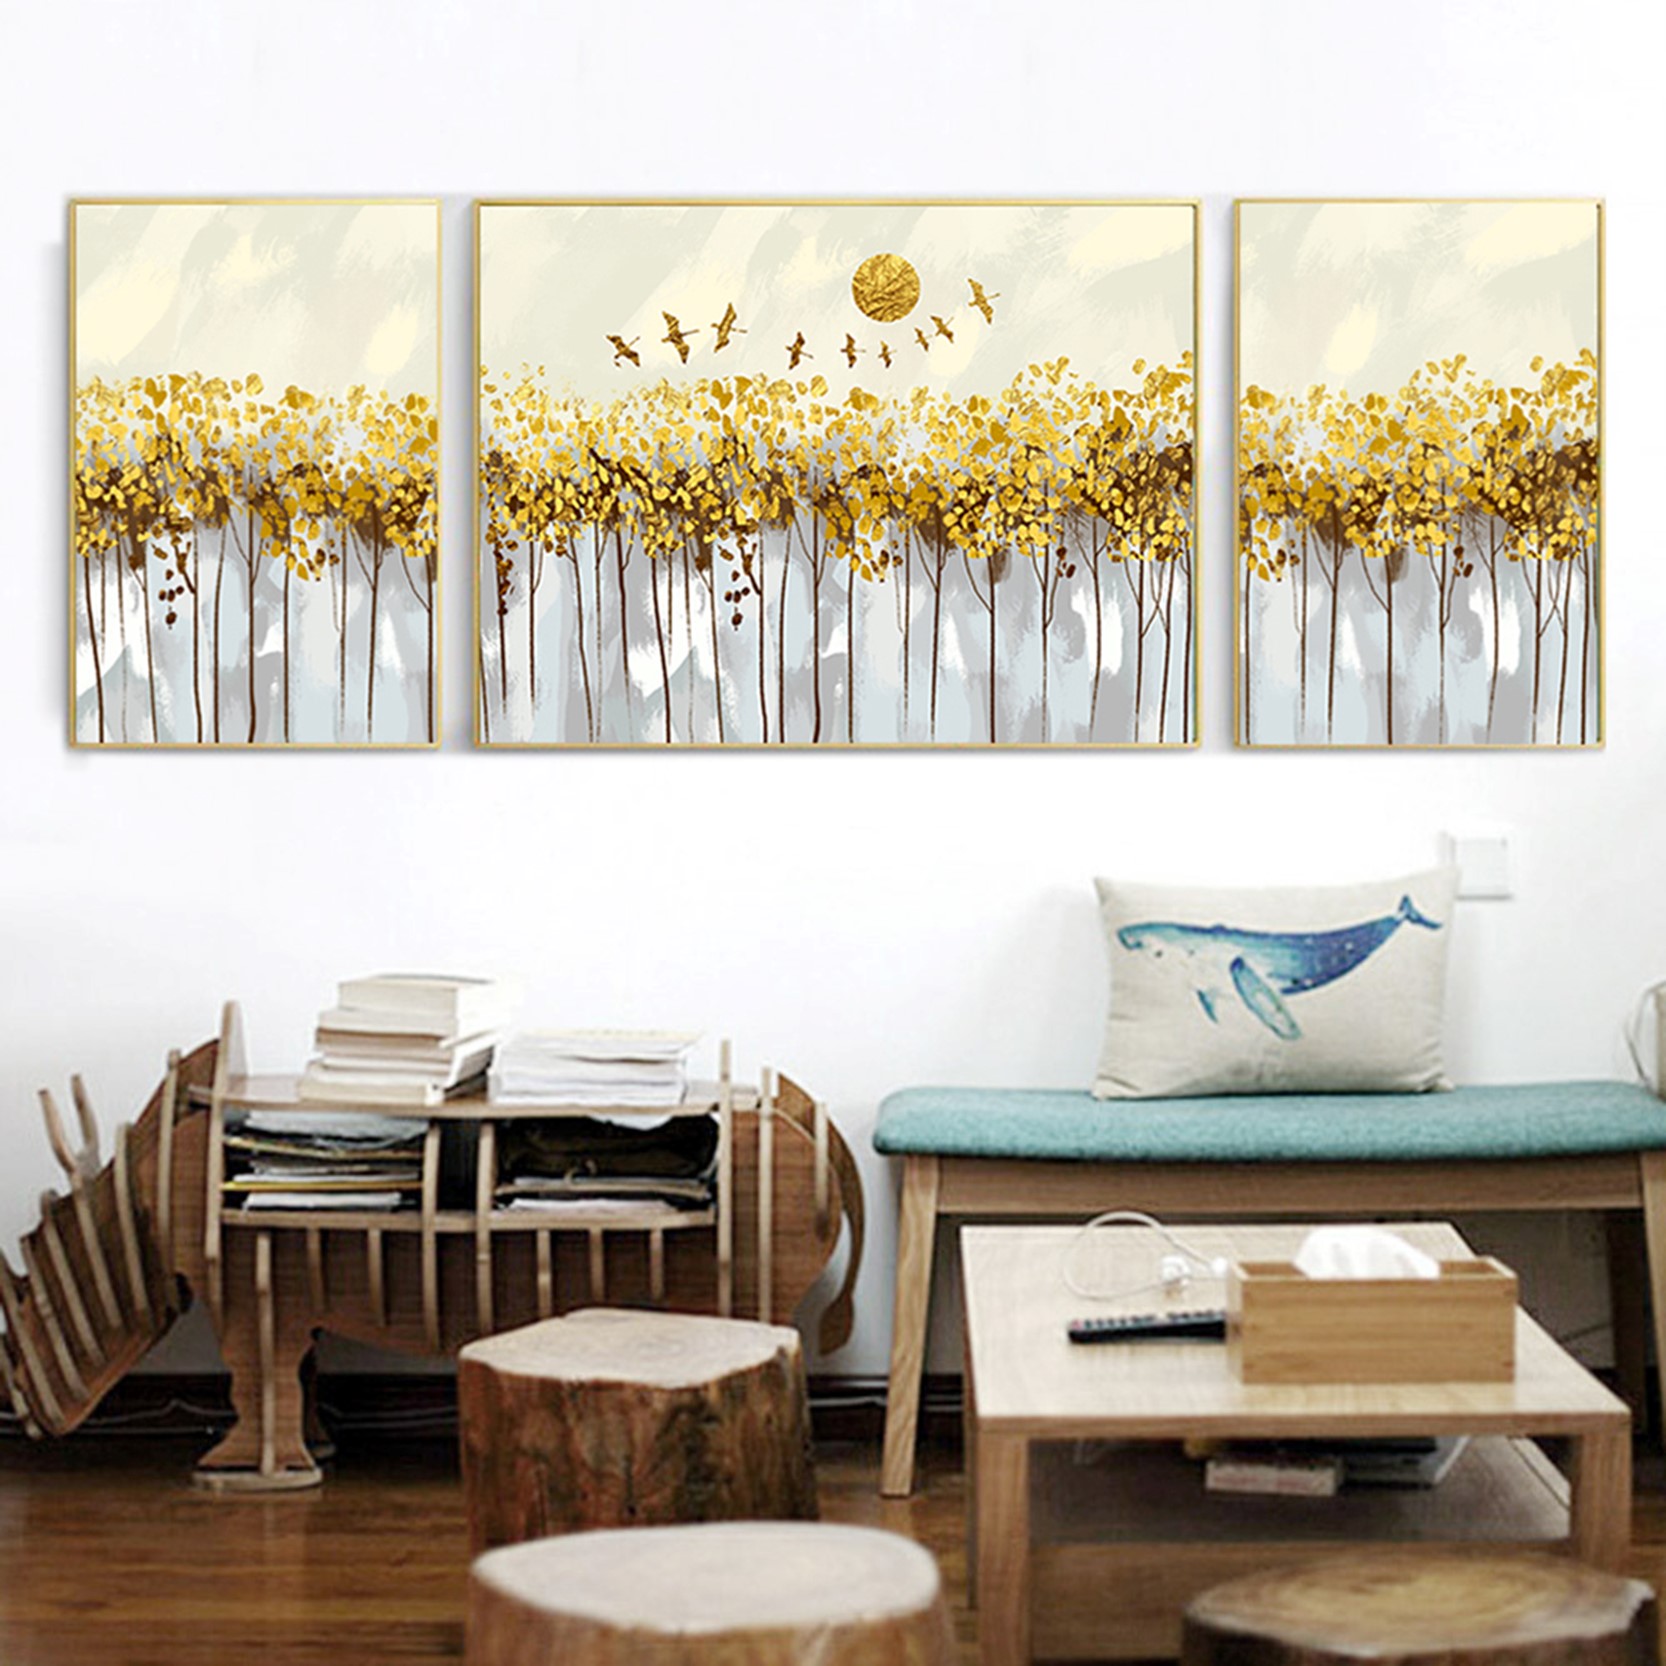 s欧式美式 金色树林飞鸟客厅卧室餐厅高清装饰画芯素材打印图片H31159